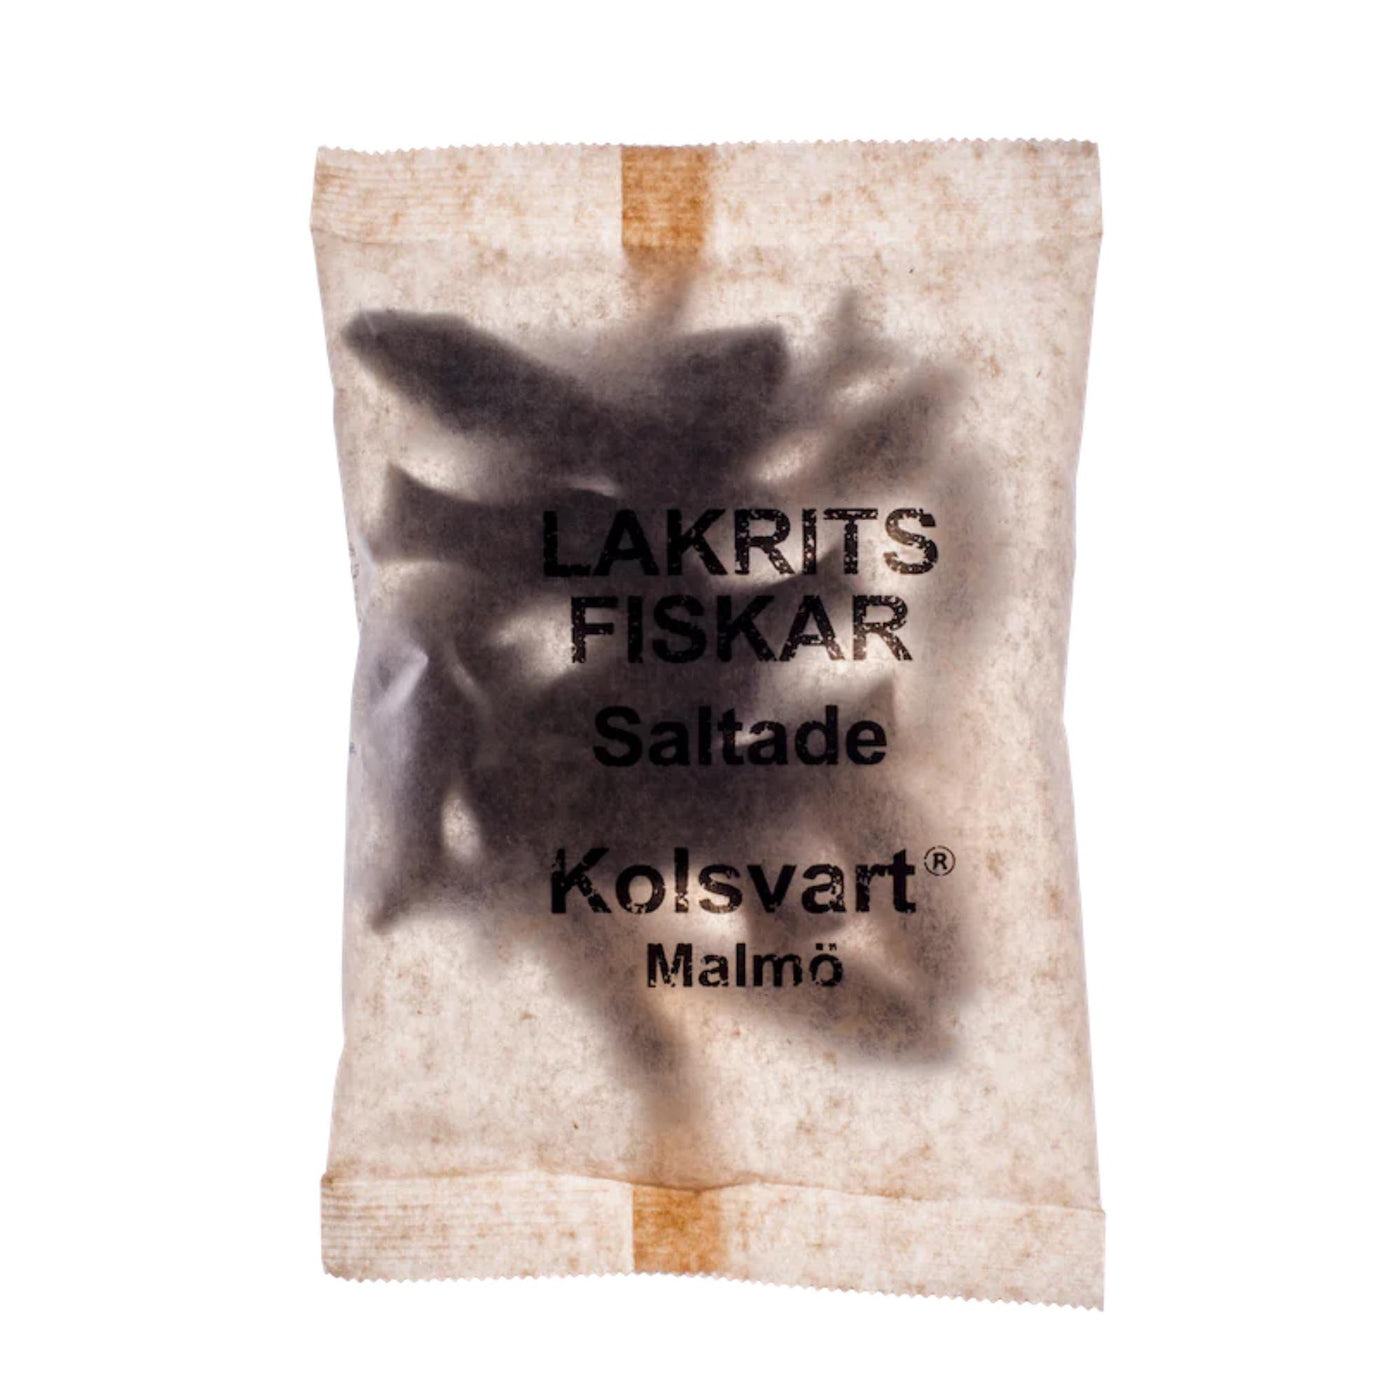 Kolsvart Lakrits Salta Fiskar - Swedish Salty Liquorice Fish